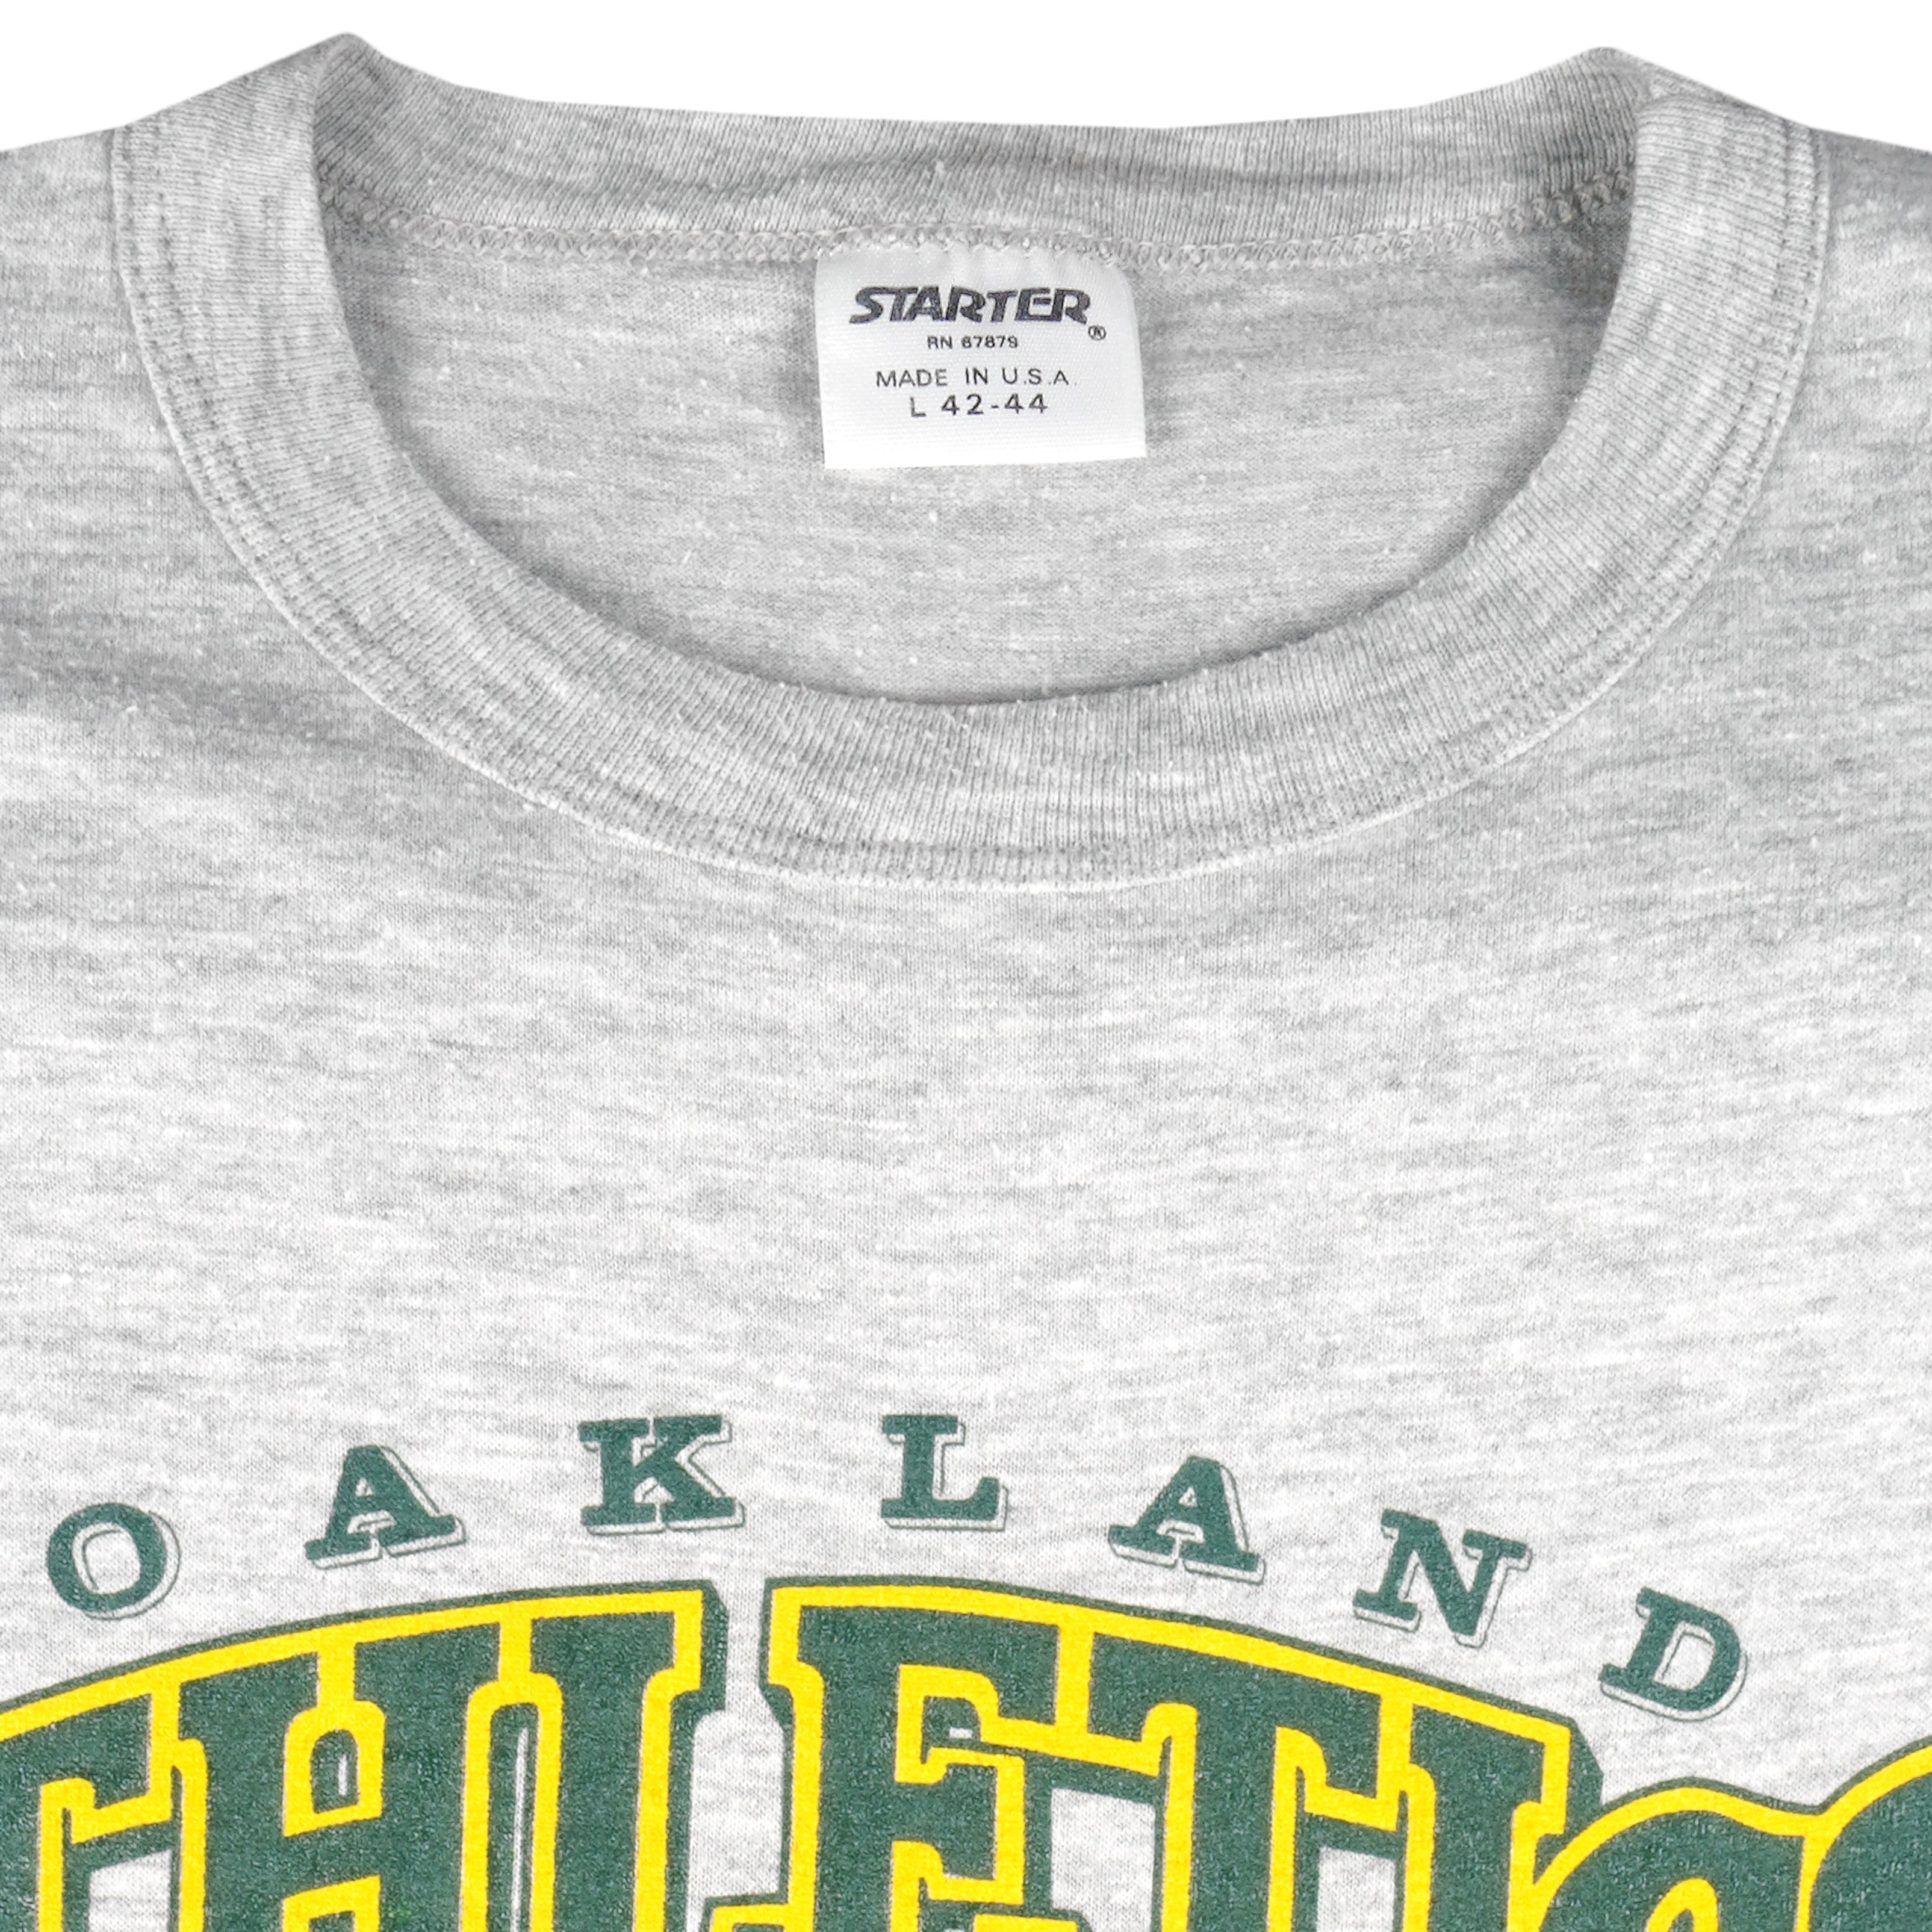 Oakland Athletics '47 Brand A's Club Gray Short Sleeve T-Shirt M